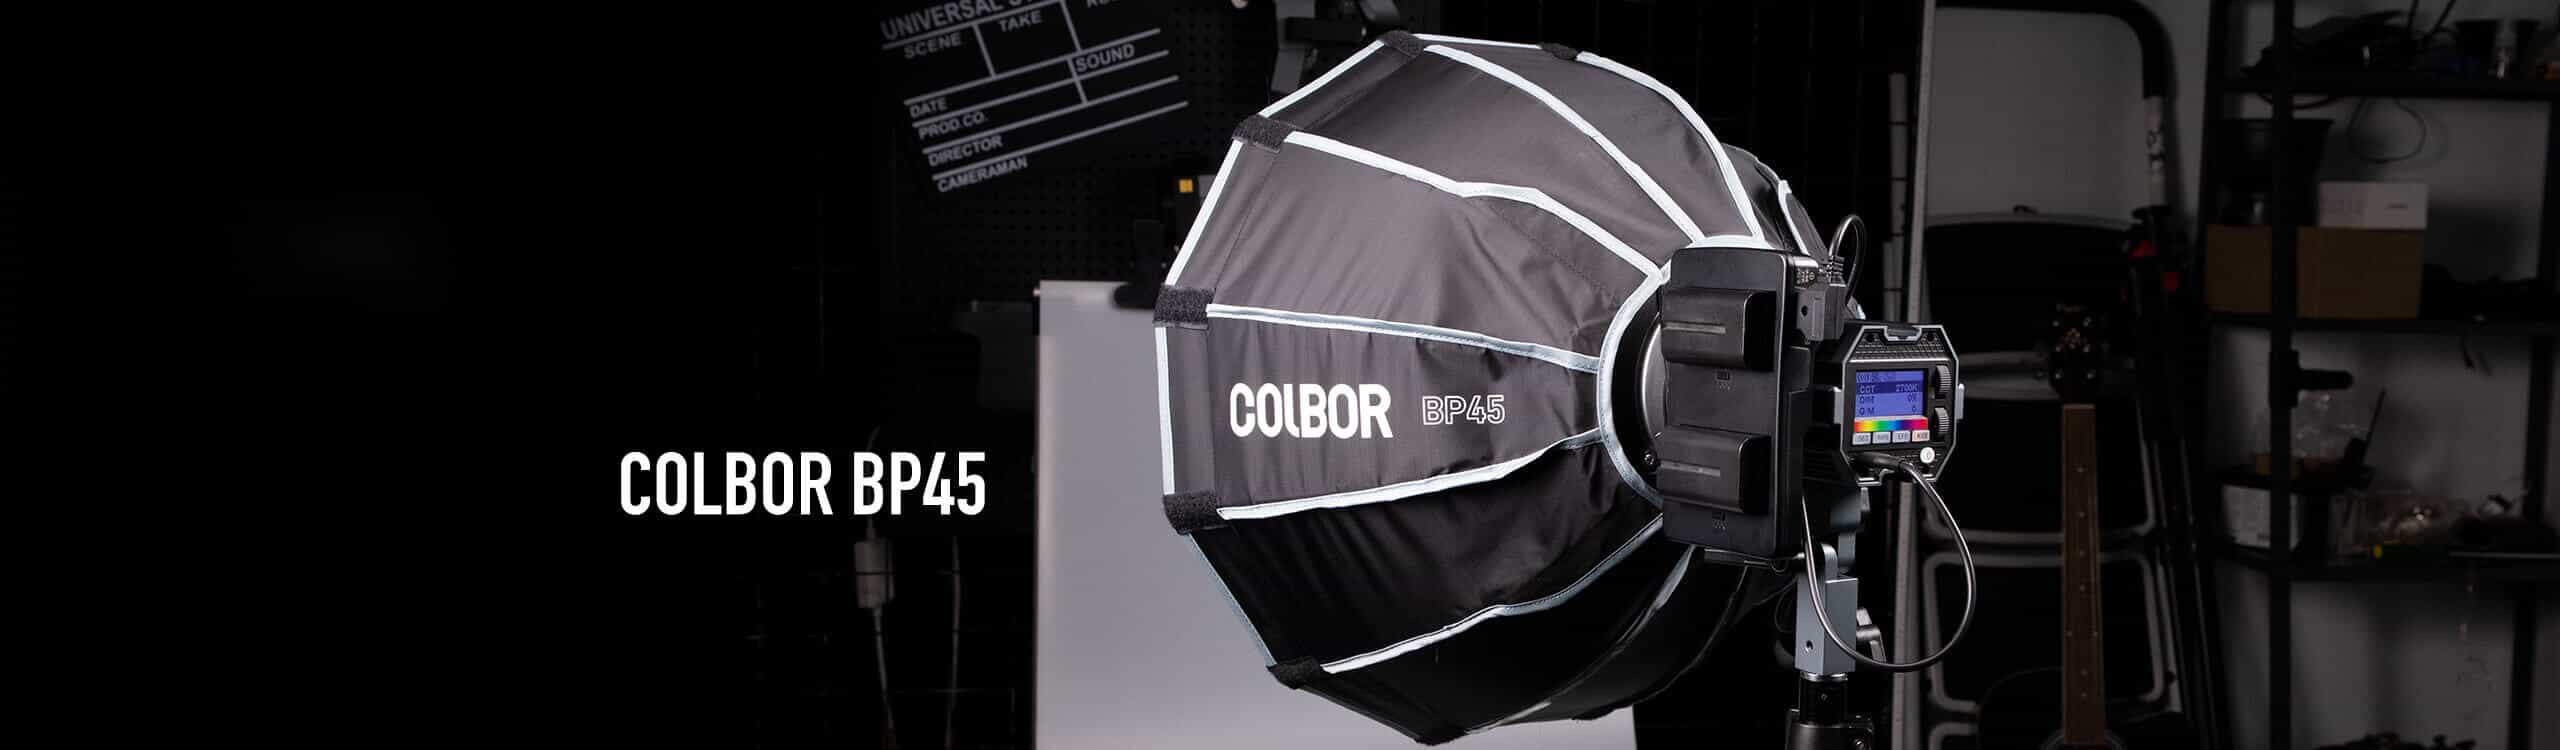 COLBOR BP45 45cm Parabolic Softbox